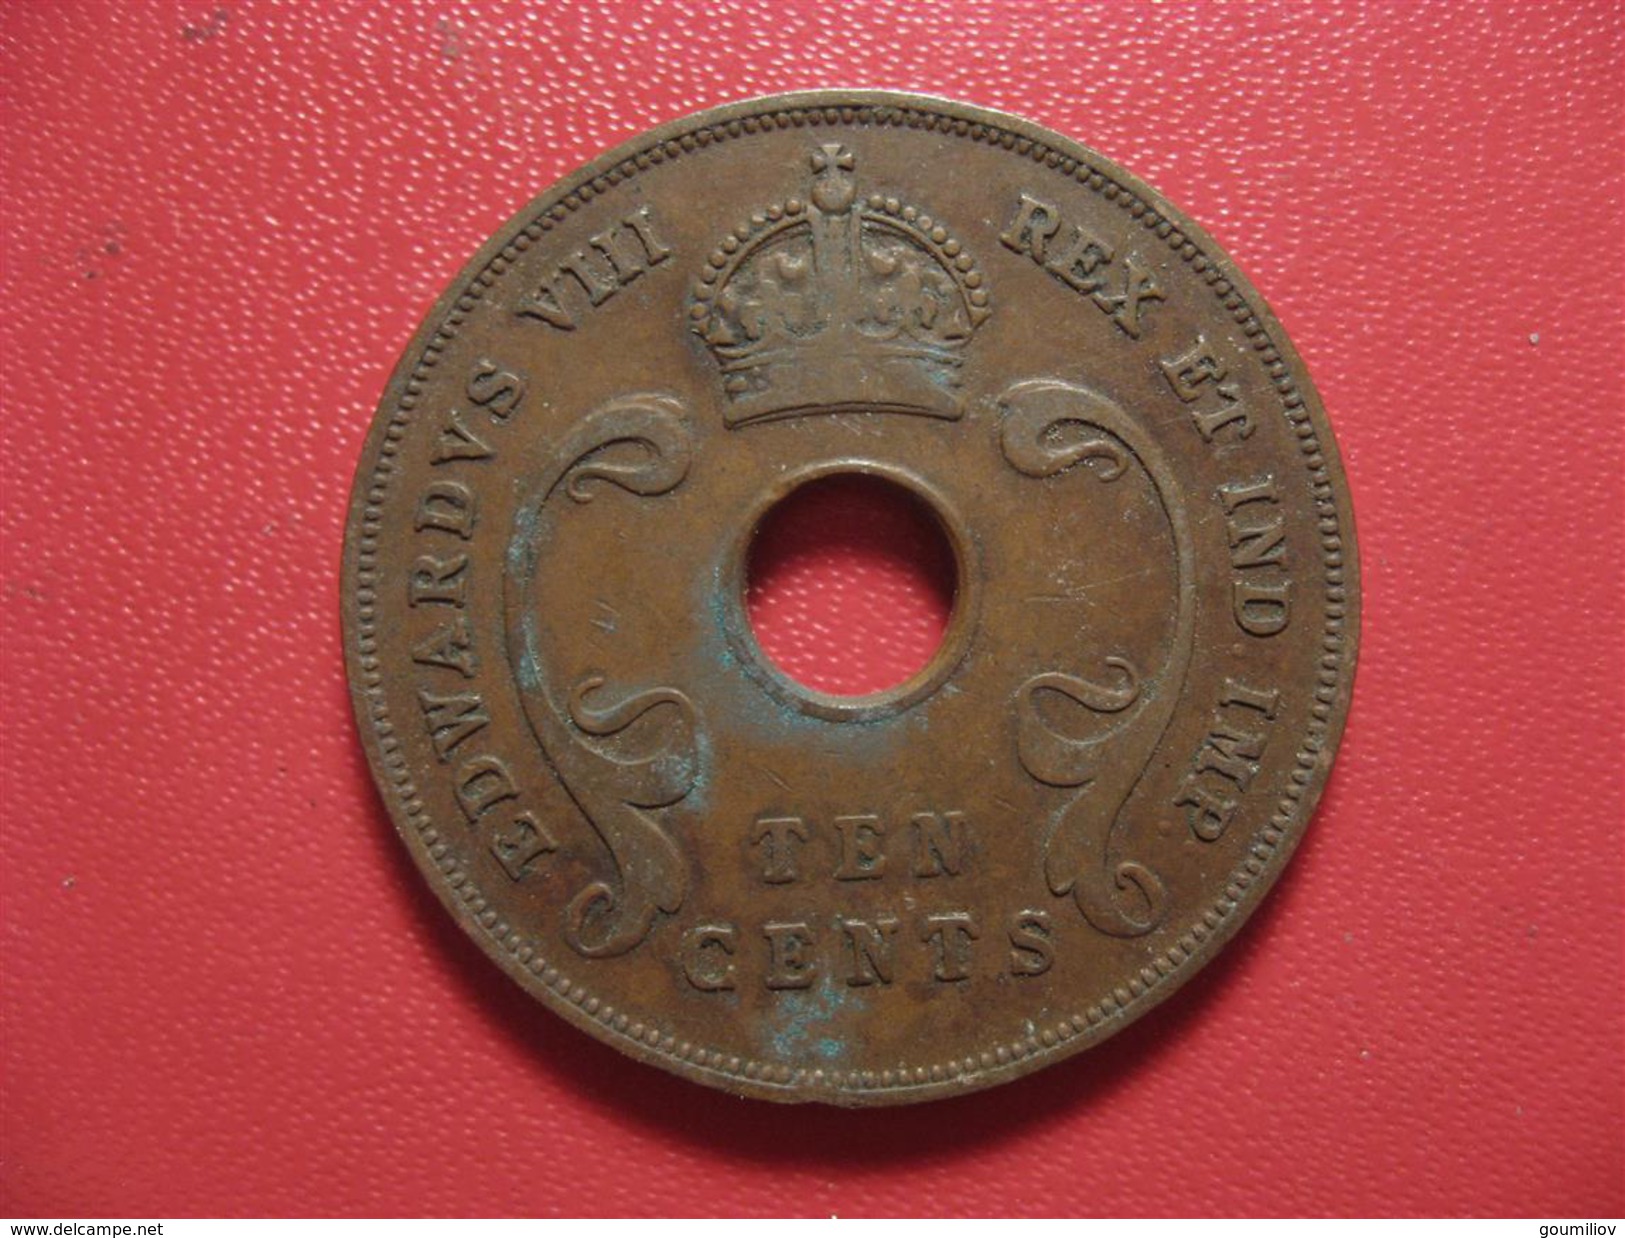 East Africa - 10 Cents 1936 6992 - Colonia Britannica